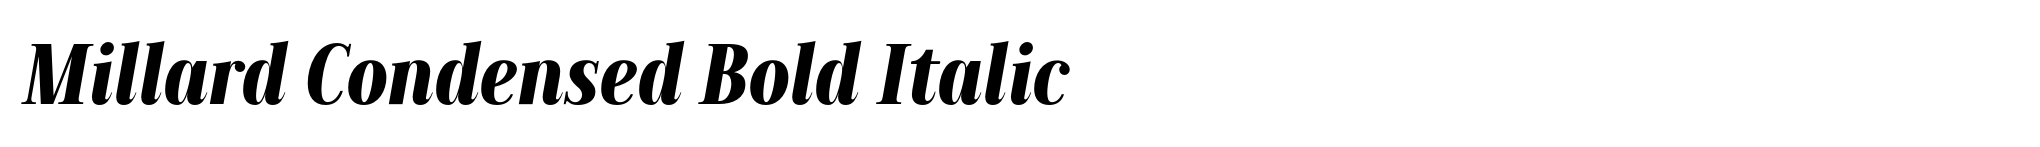 Millard Condensed Bold Italic image